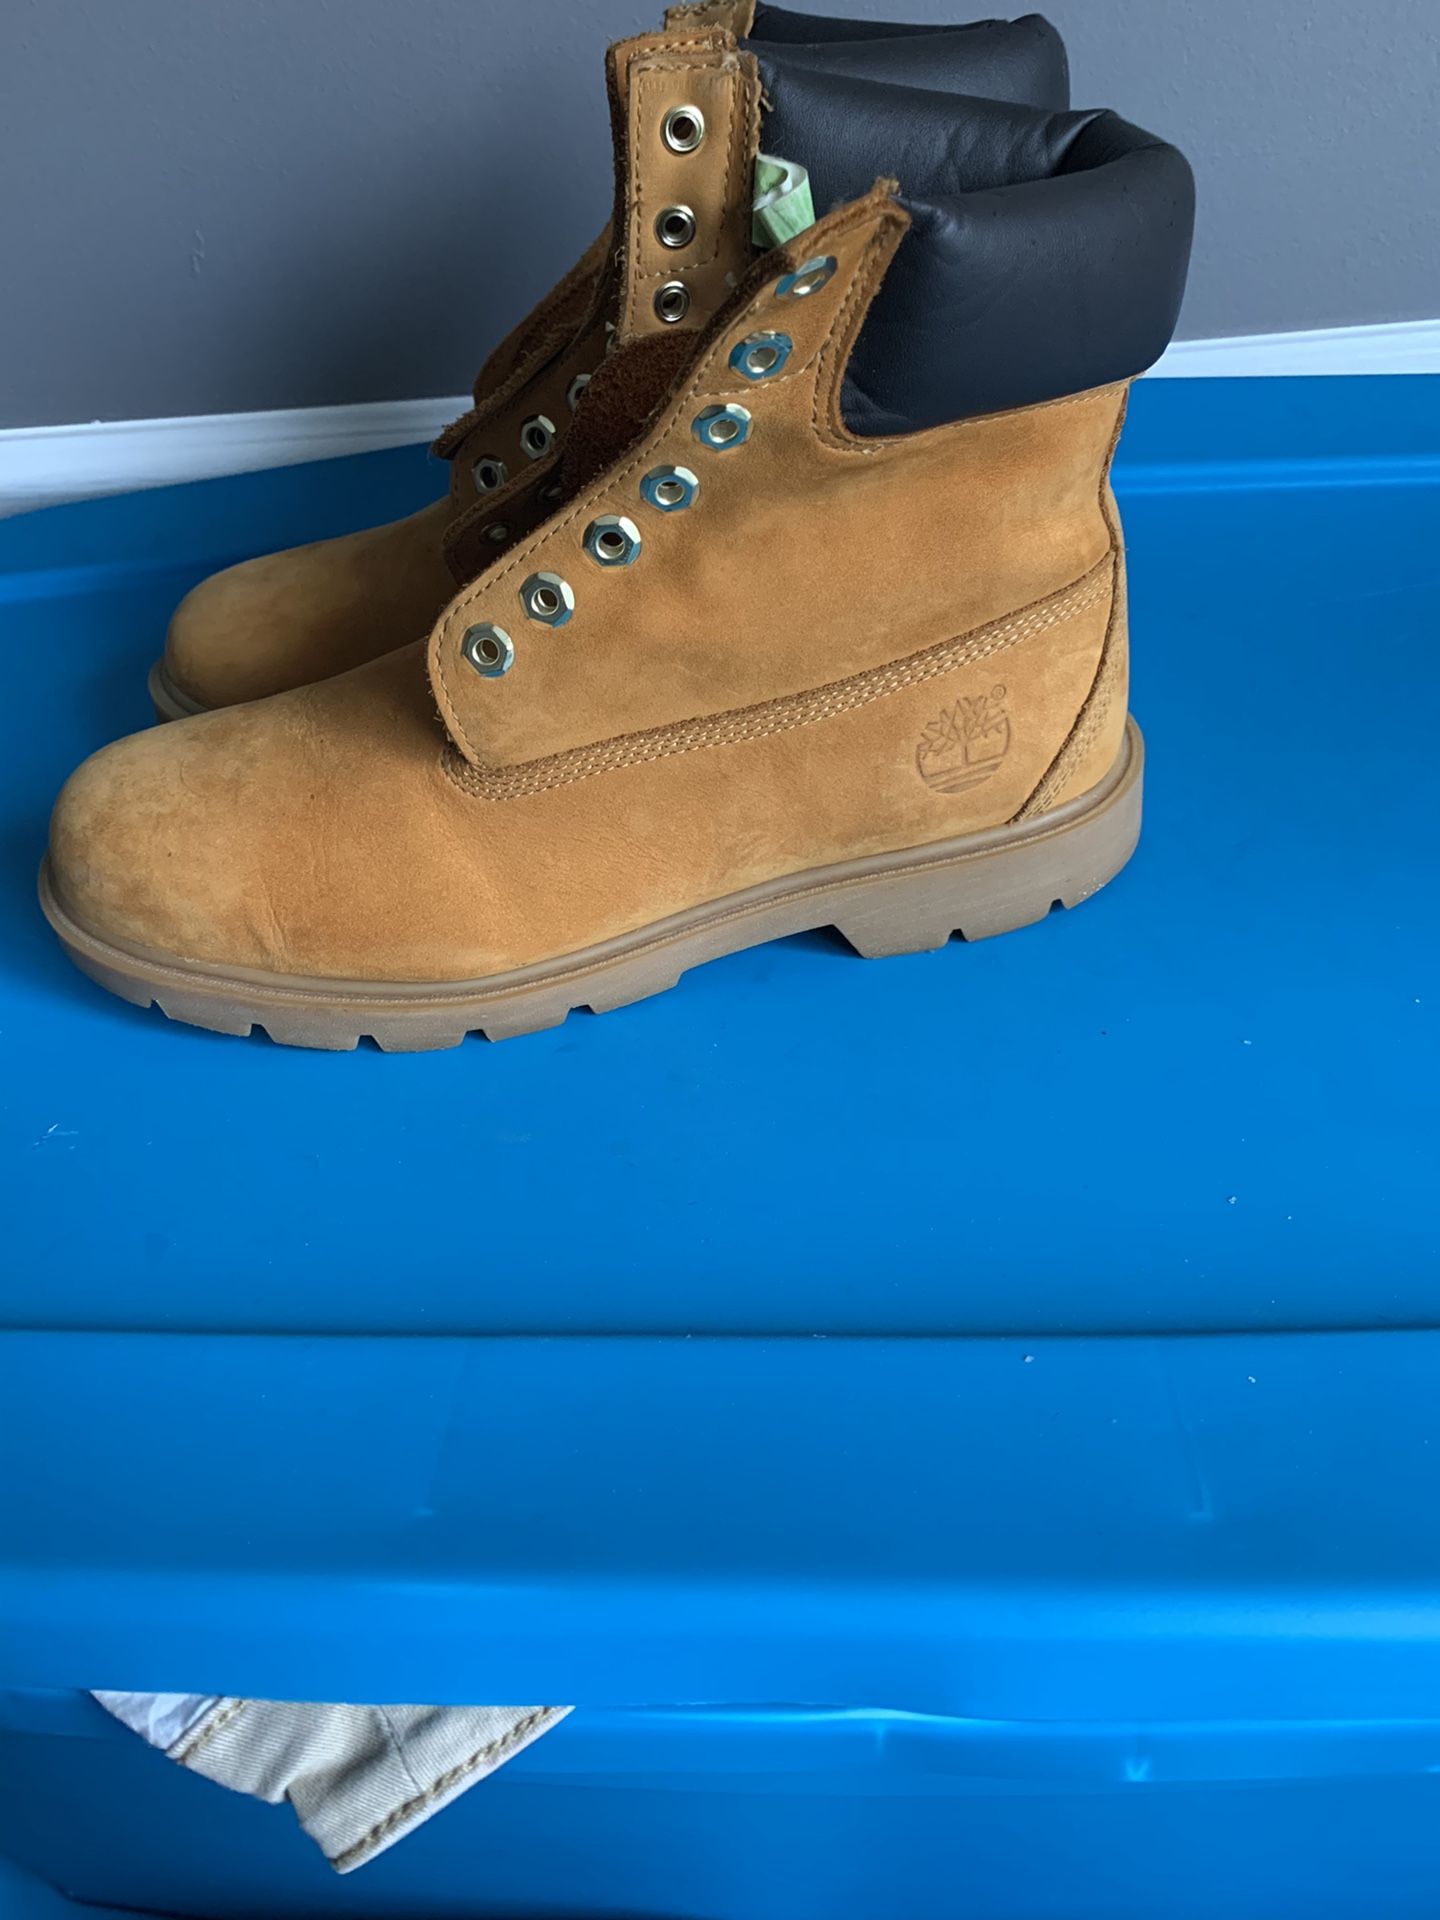 Gently Worn Timberland Waterproof Boots